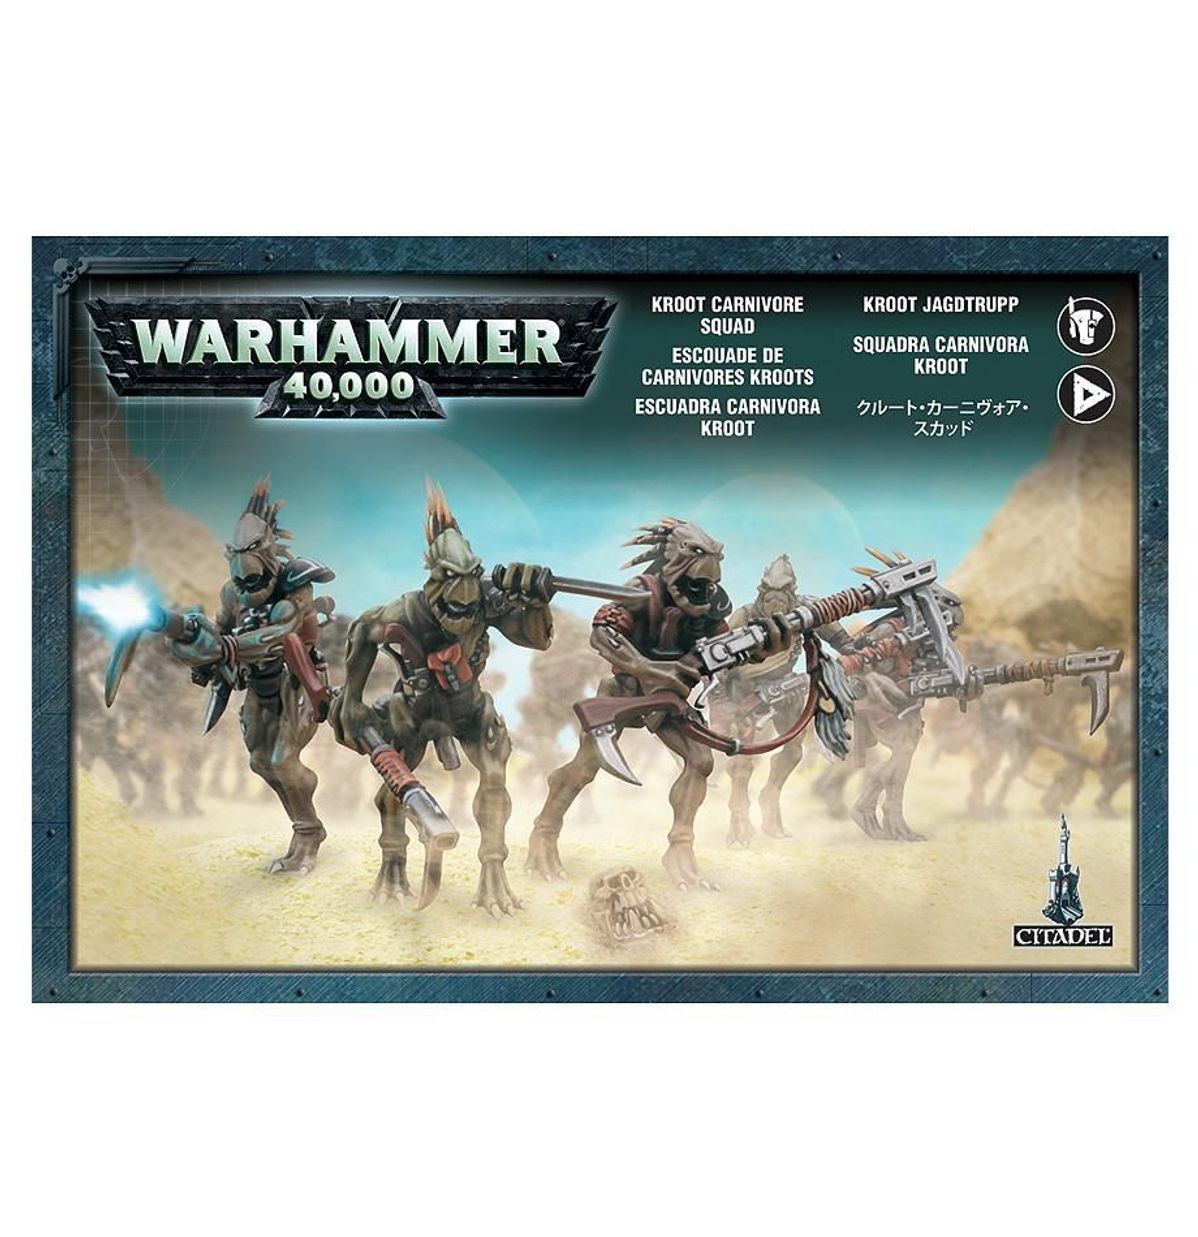 Warhammer 40,000 T'au Empire Kroot Carnivore Squad MK7A92IQ7P |63728|